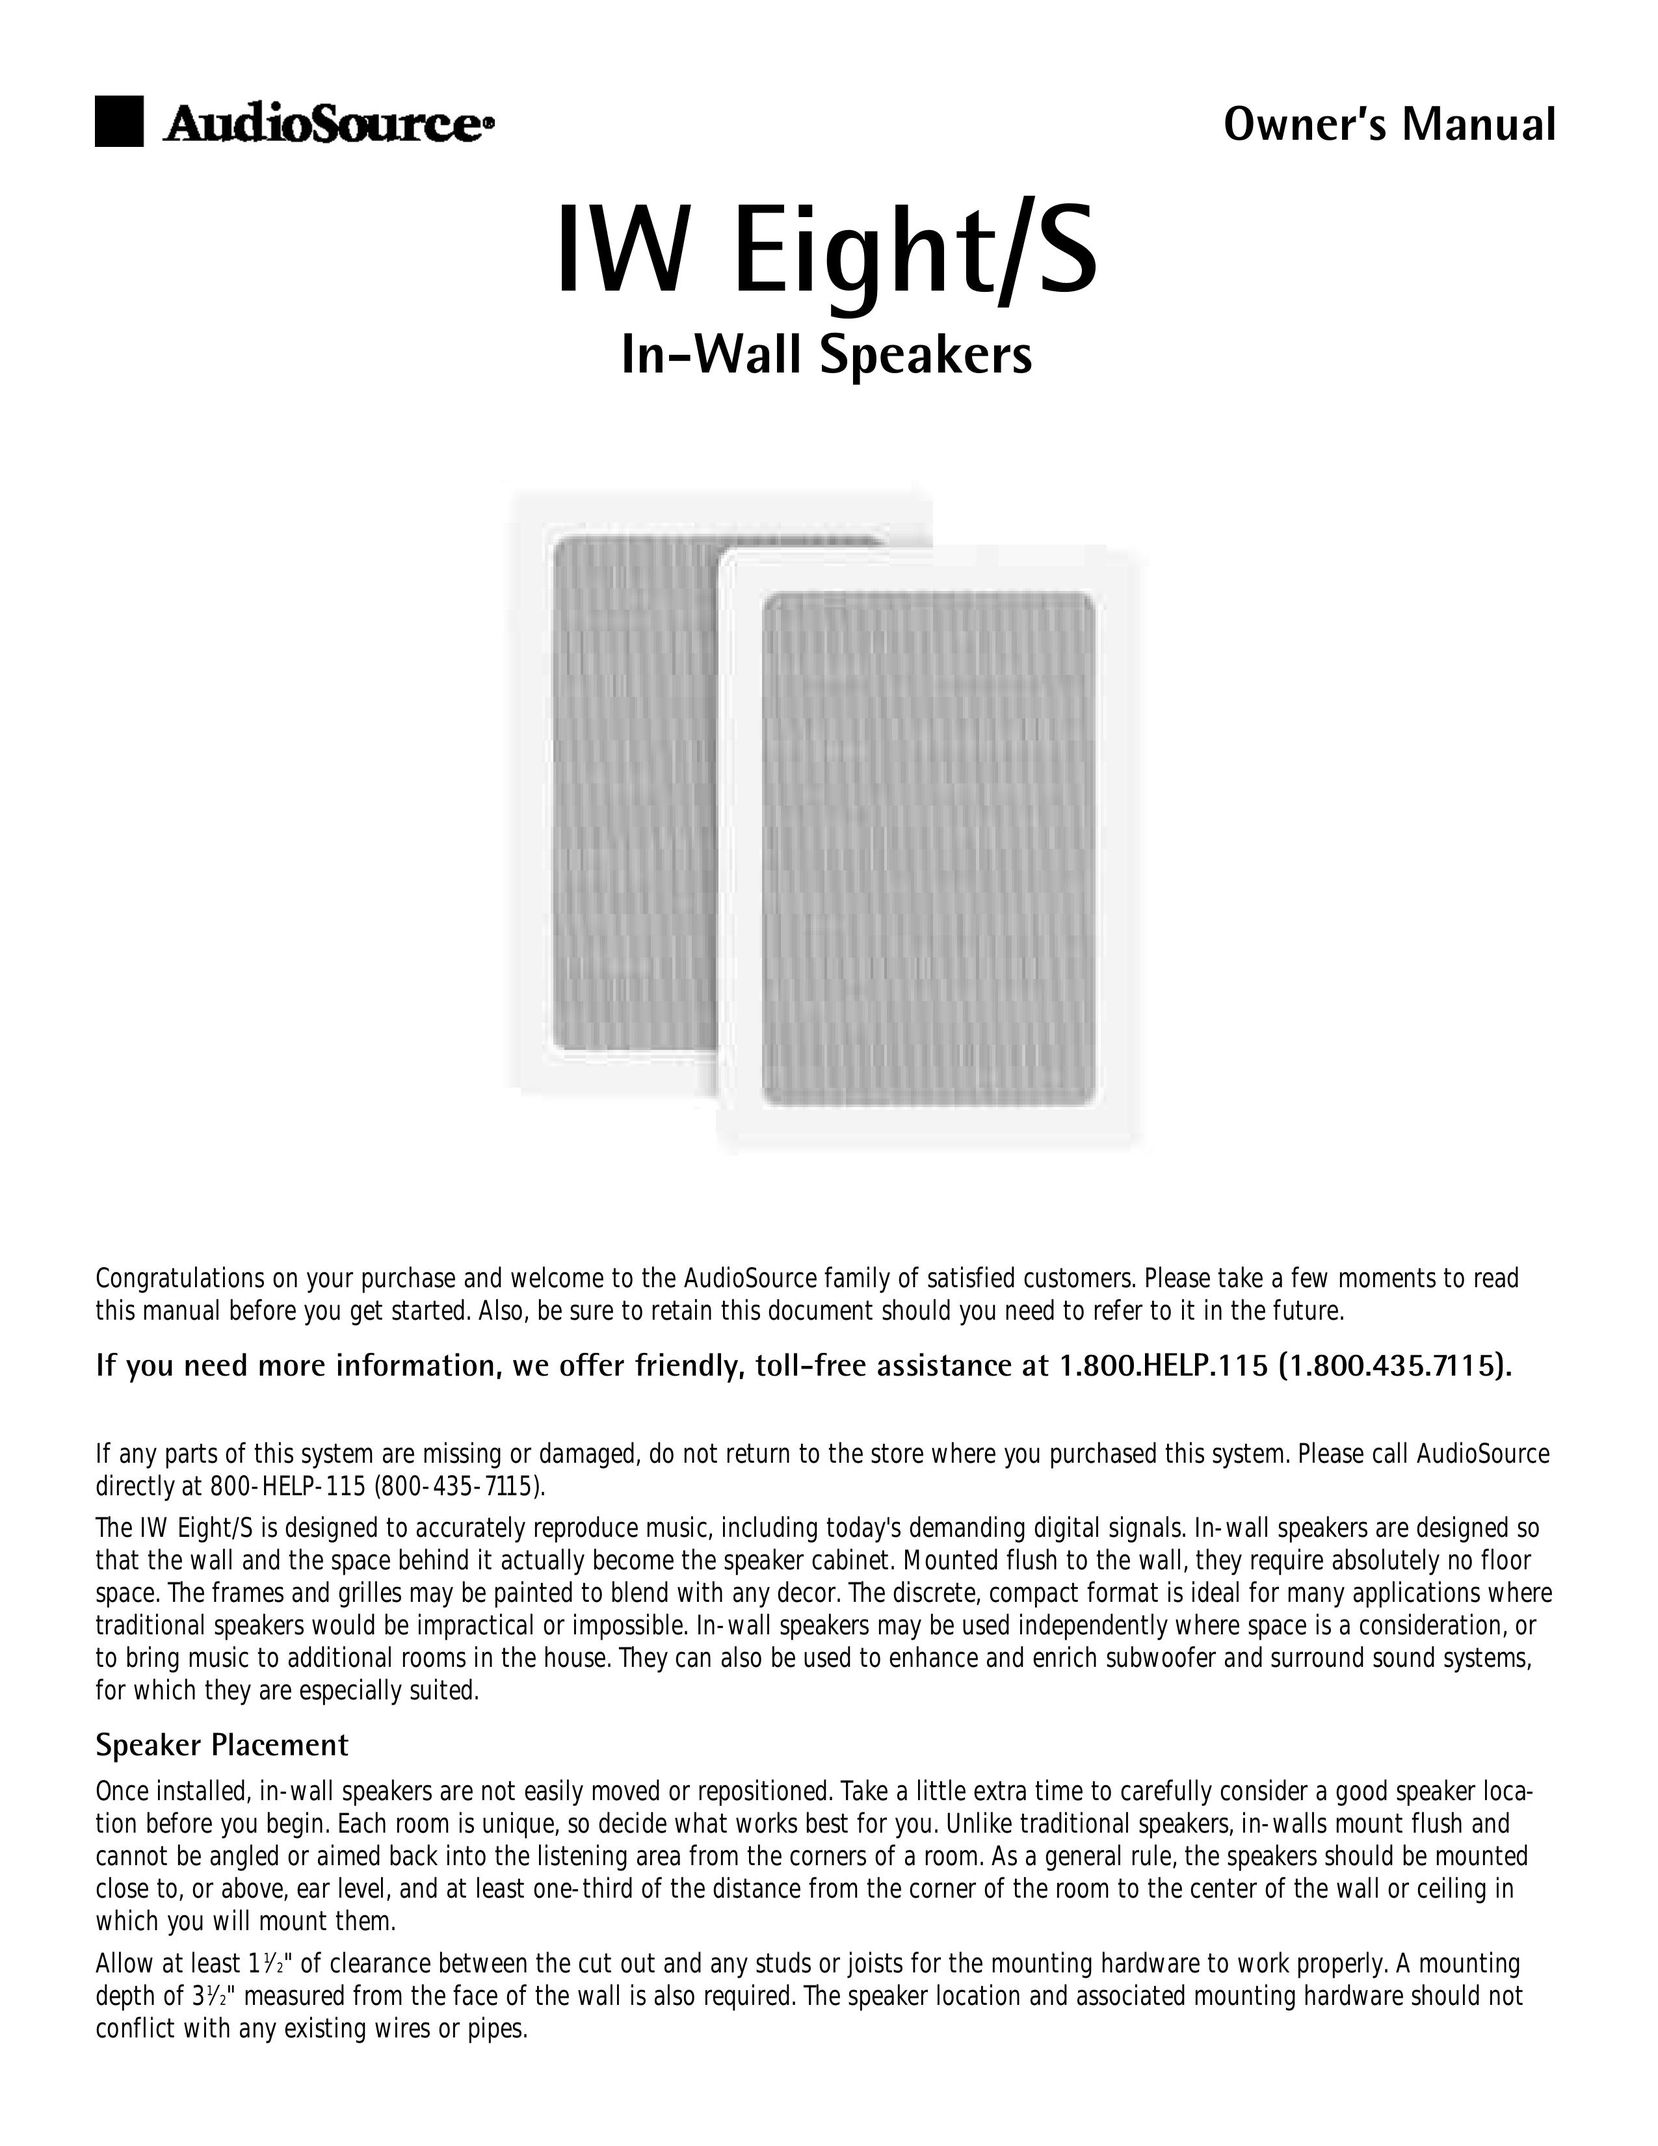 Audiovox IW Eight/S Speaker User Manual